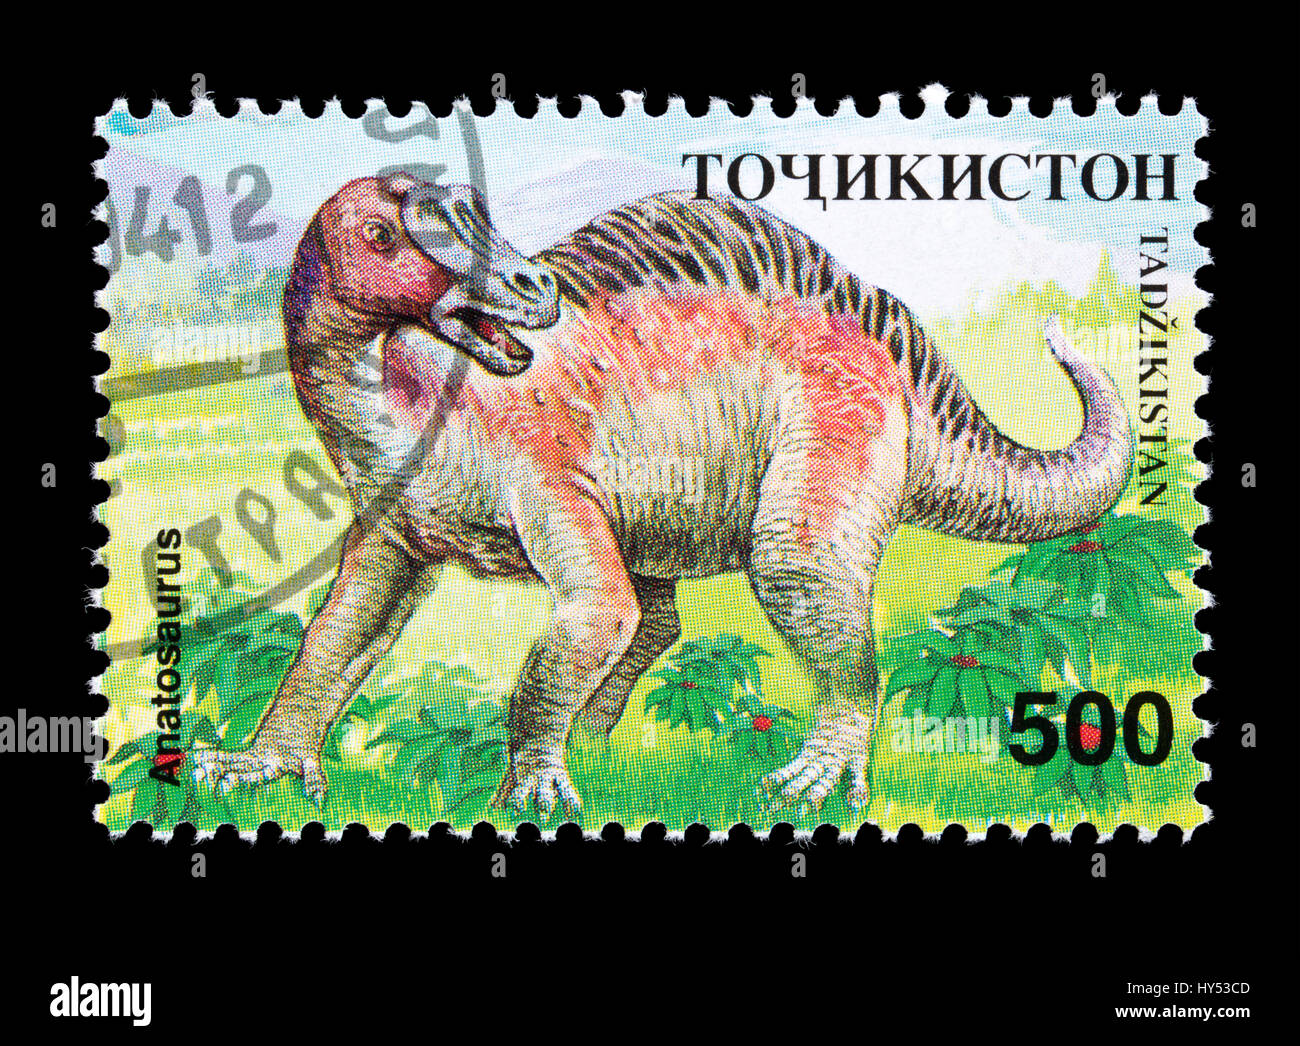 Postage stamp from Tajikistan depicting a anatosaurus dinosaur Stock Photo